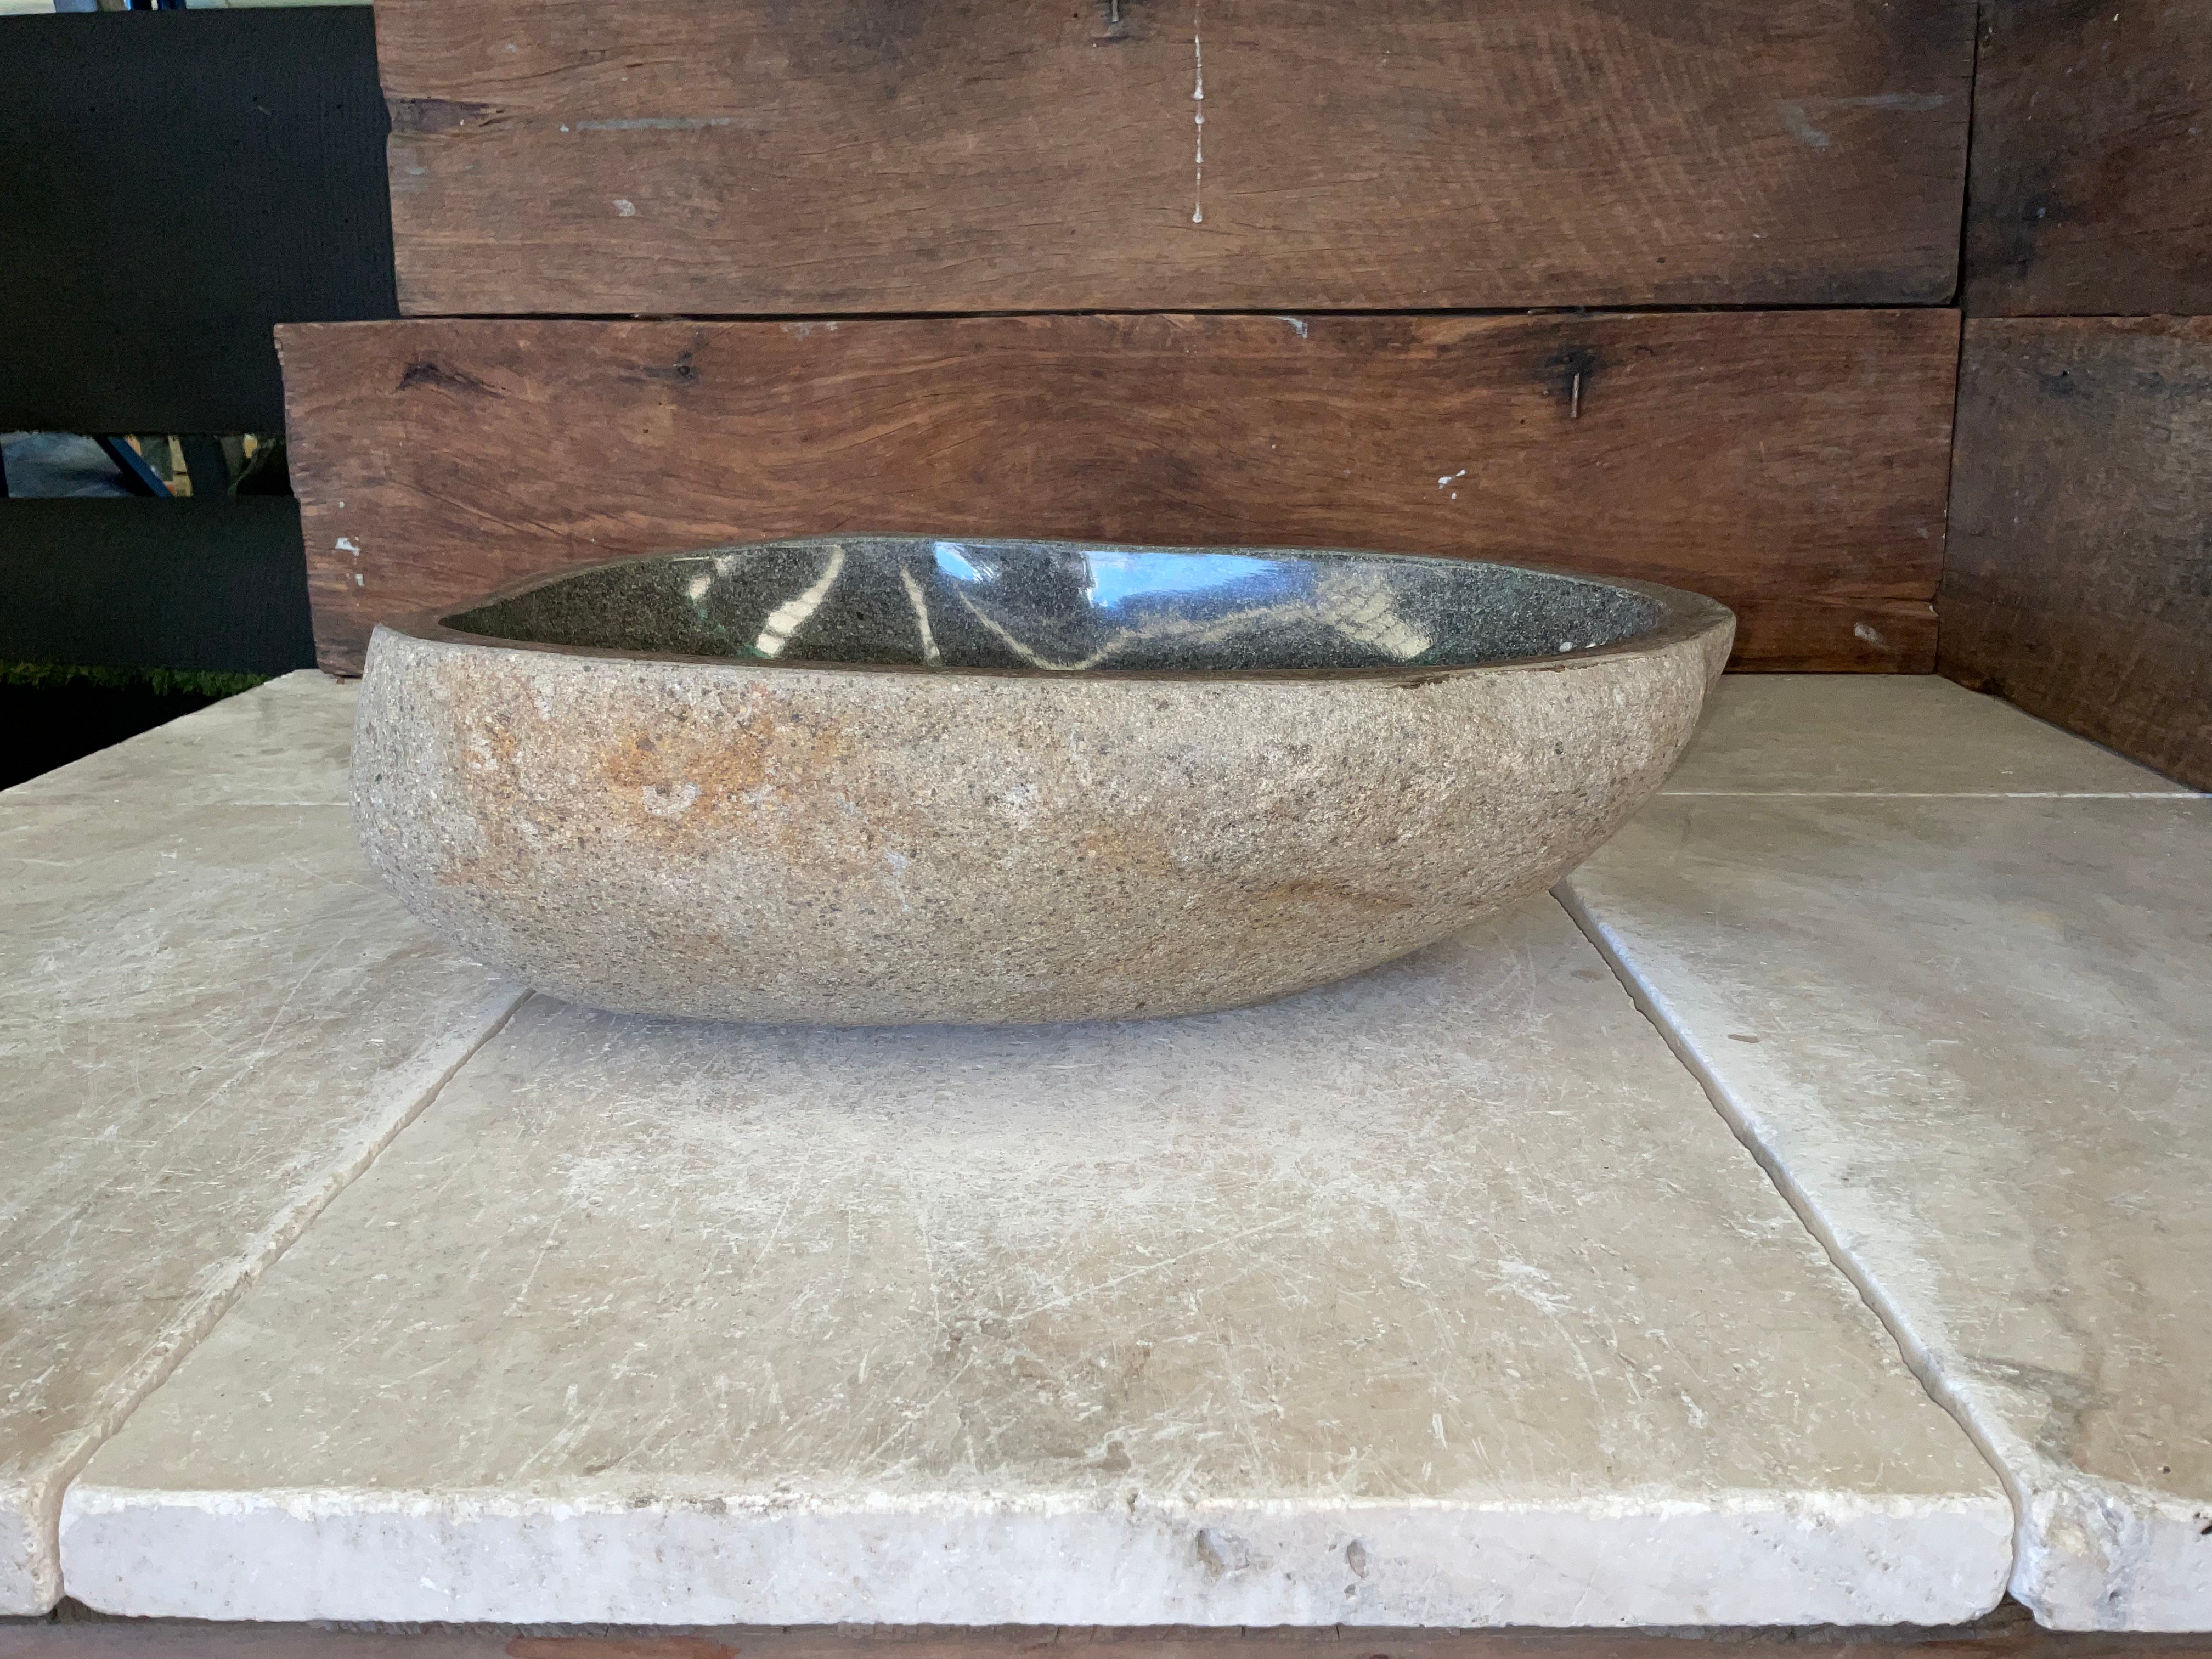 Handmade Natural Oval River Stone  Bathroom Basin  - RM 2310021